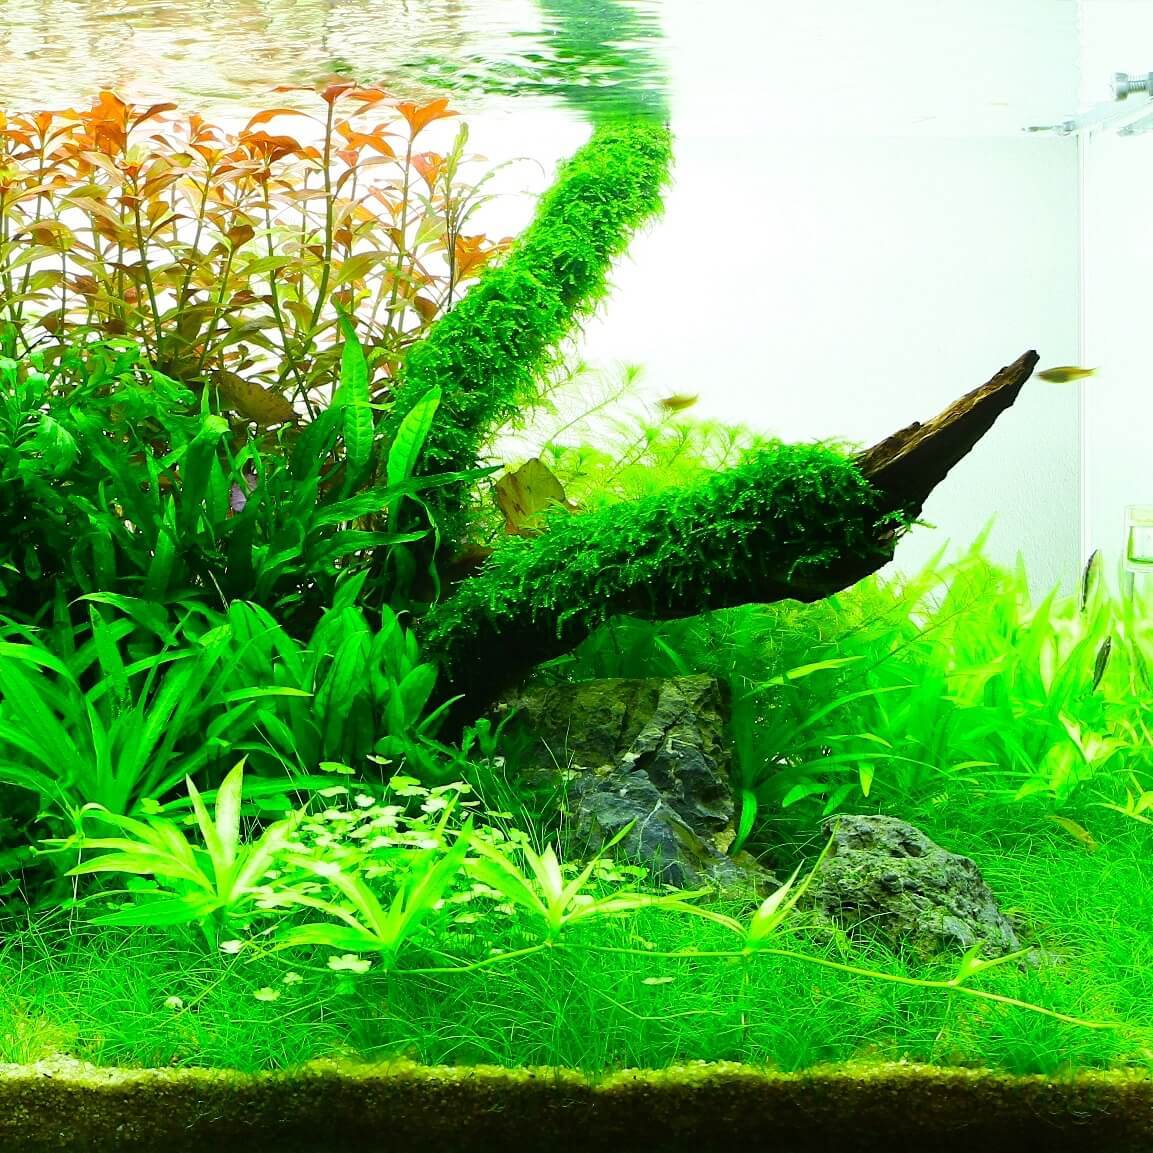 Vesicularia ferriei 'Weeping Moss' 1-2-Grow! – Aquarium Roots